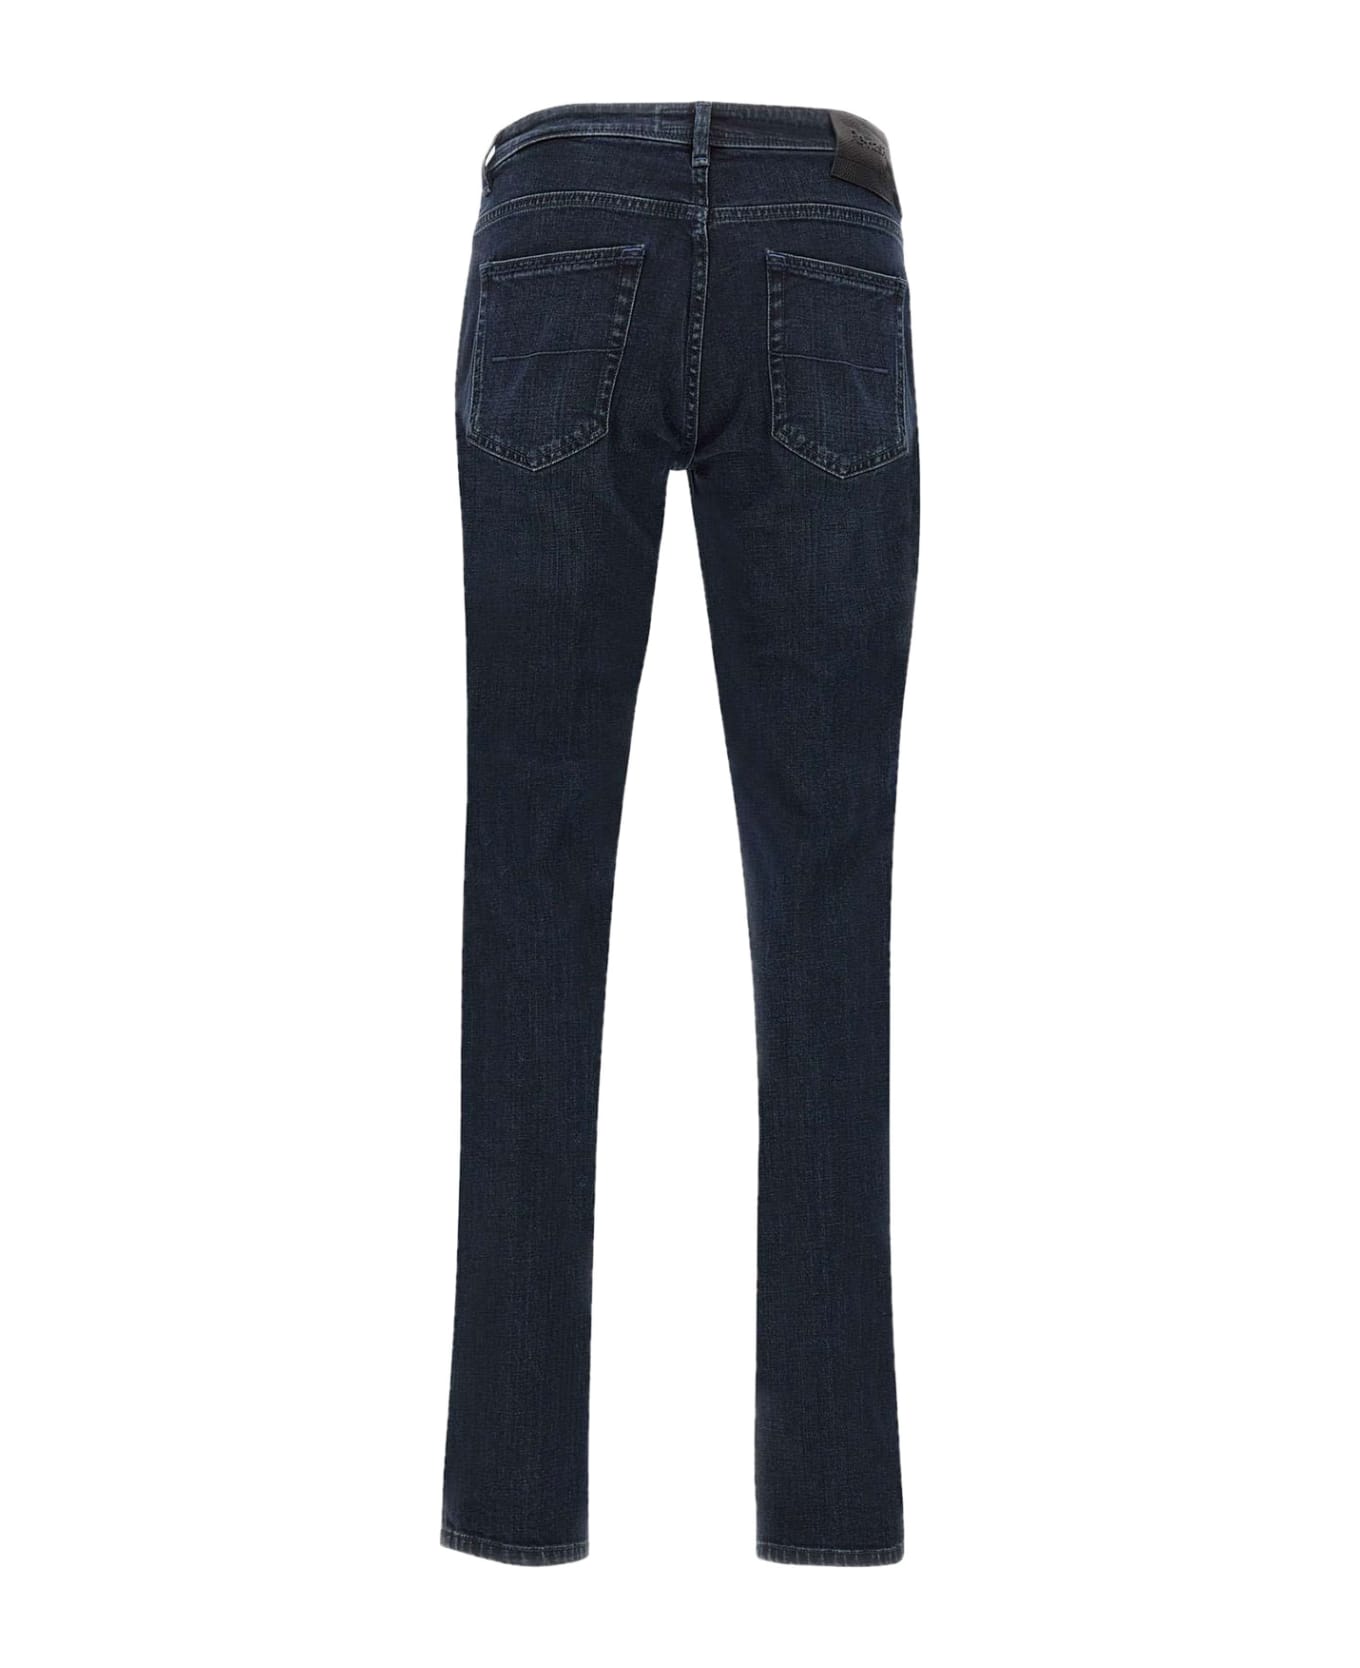 Re-HasH Five-pocket Jeans In Denim - BLUE BLACK